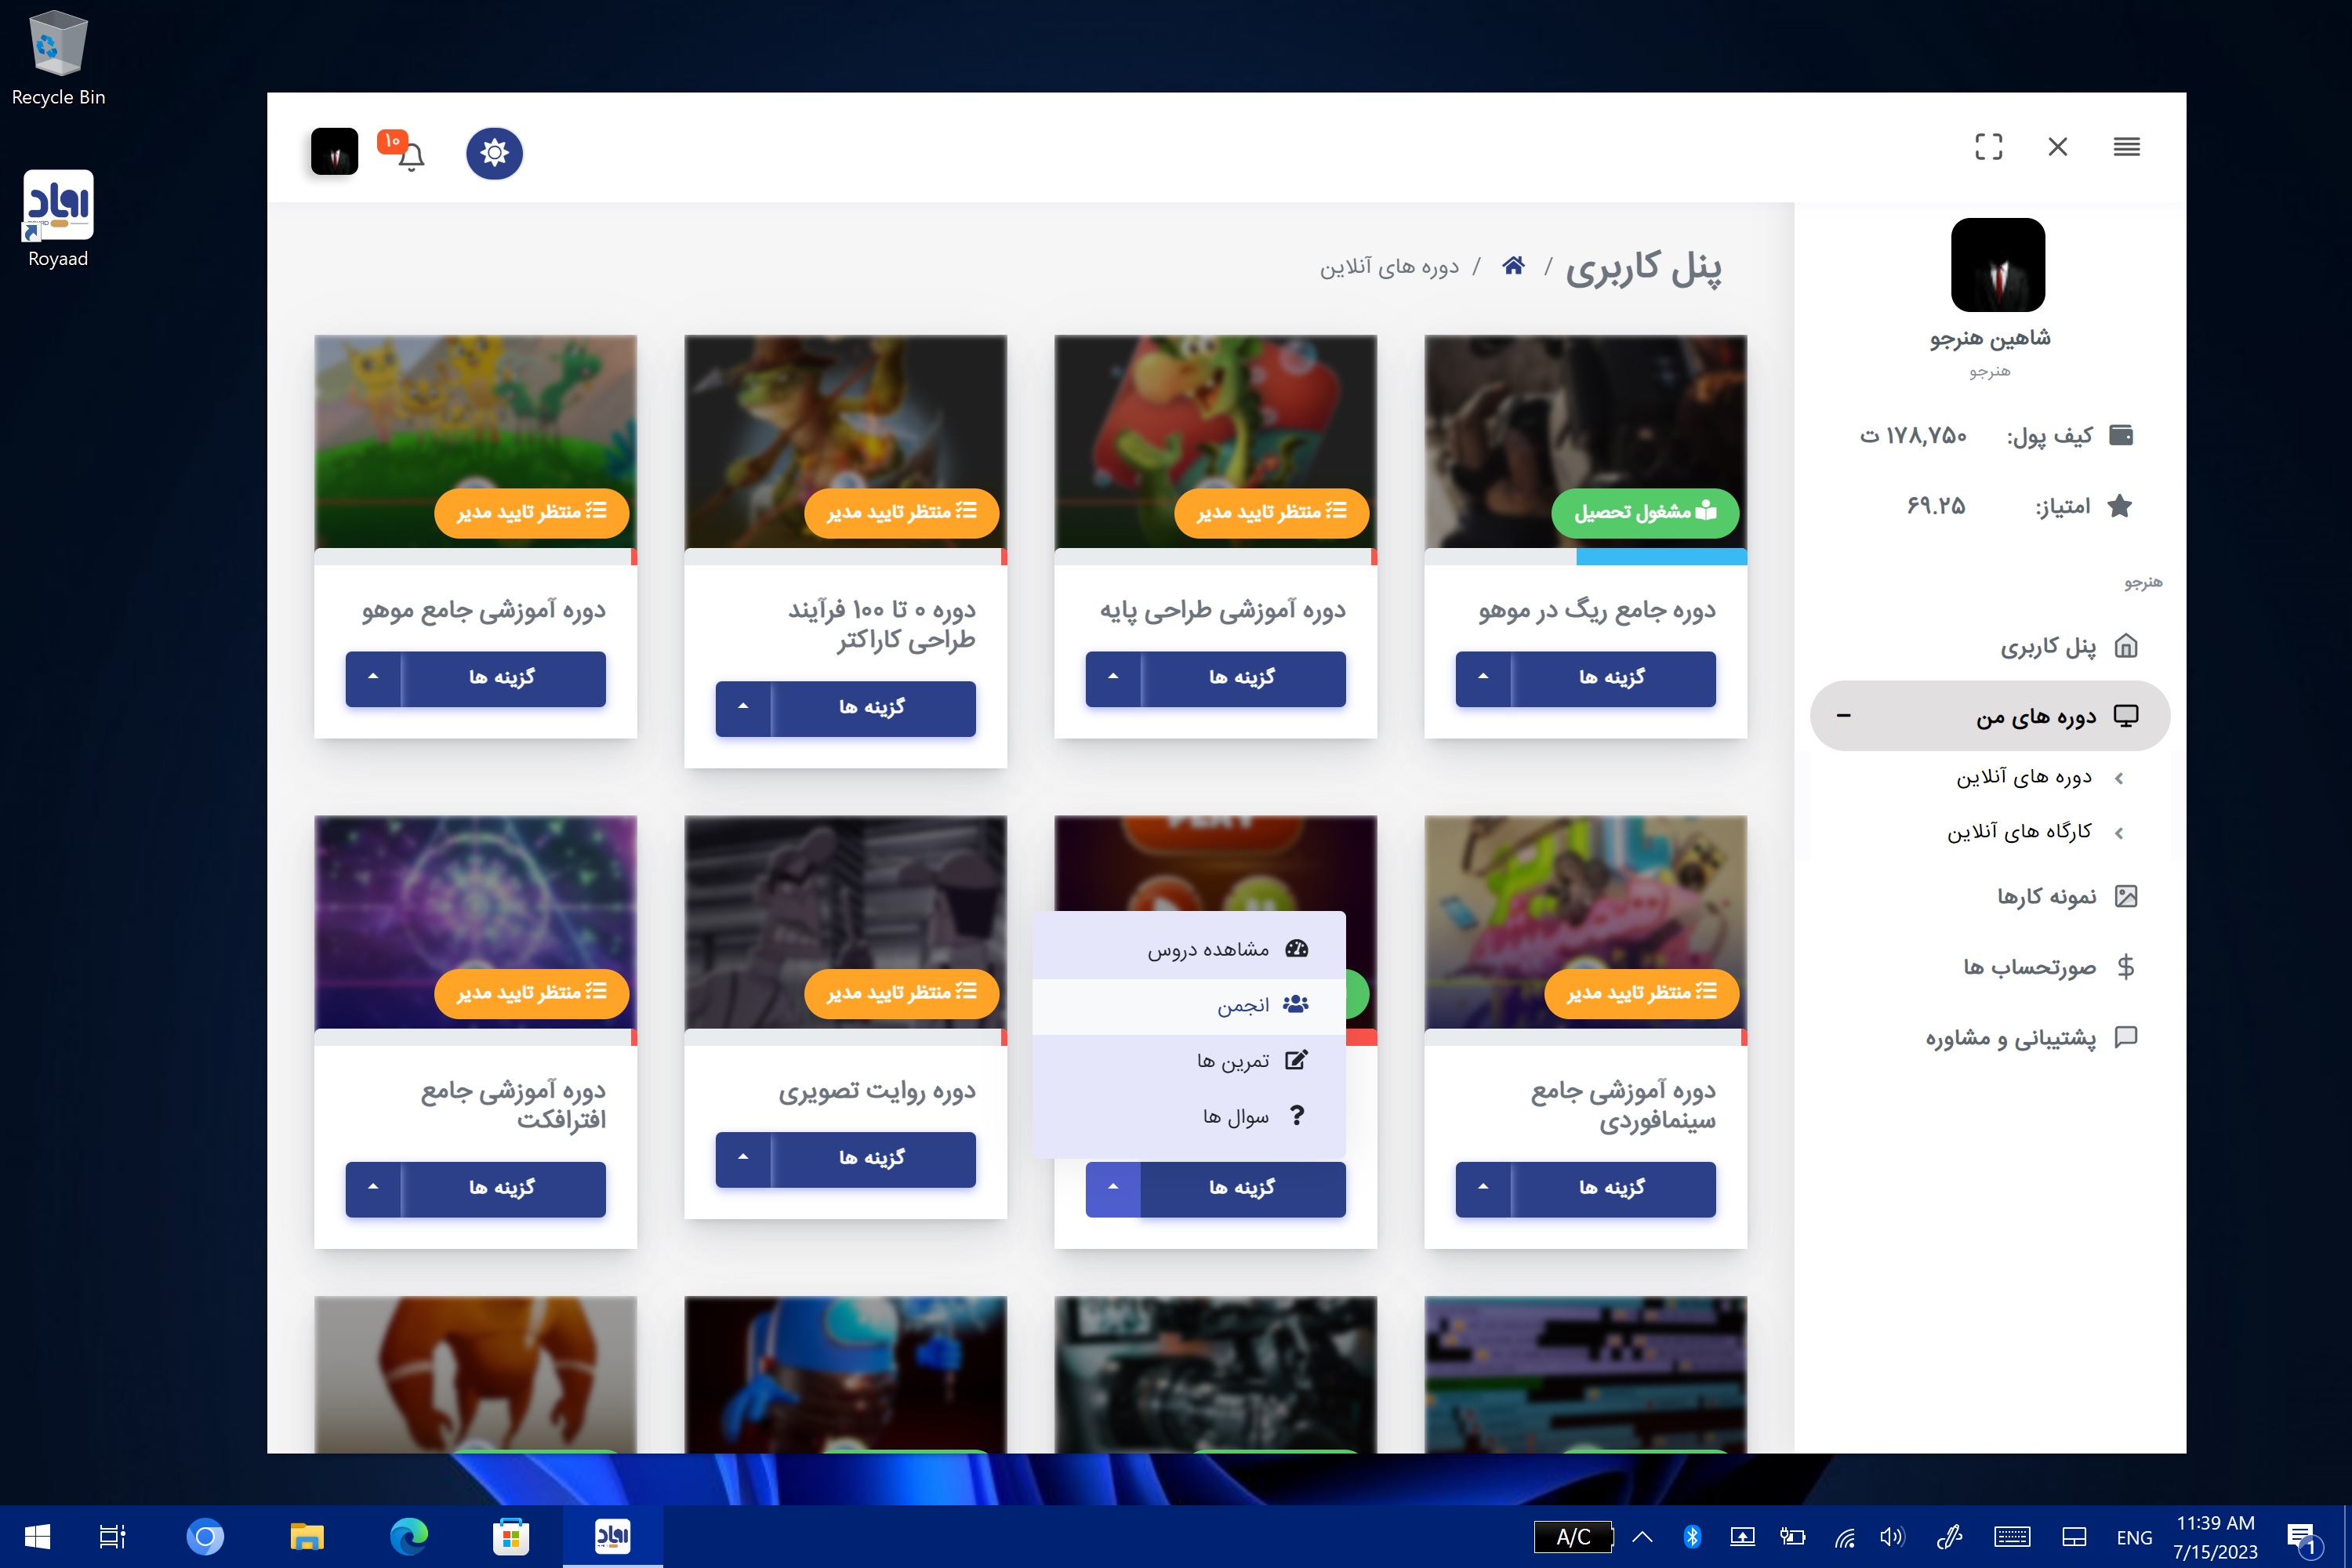 Shahinsoft.ir Royaad desktop application Online courses